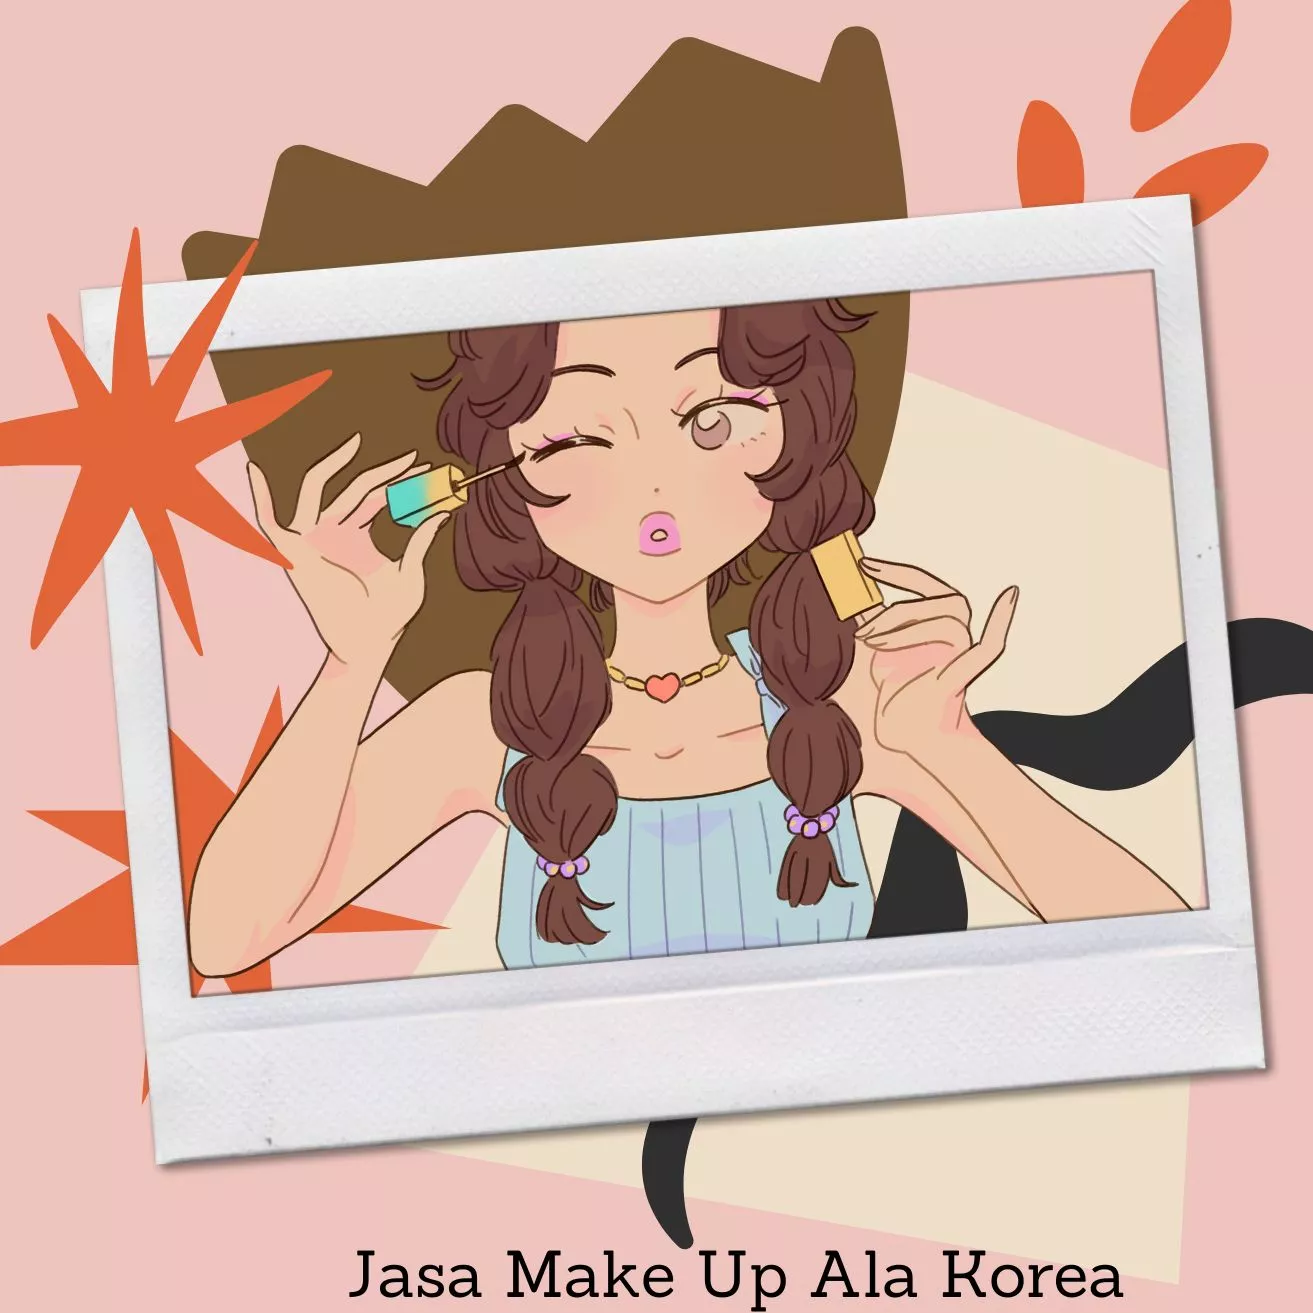 Jasa Make Up Ala Korea